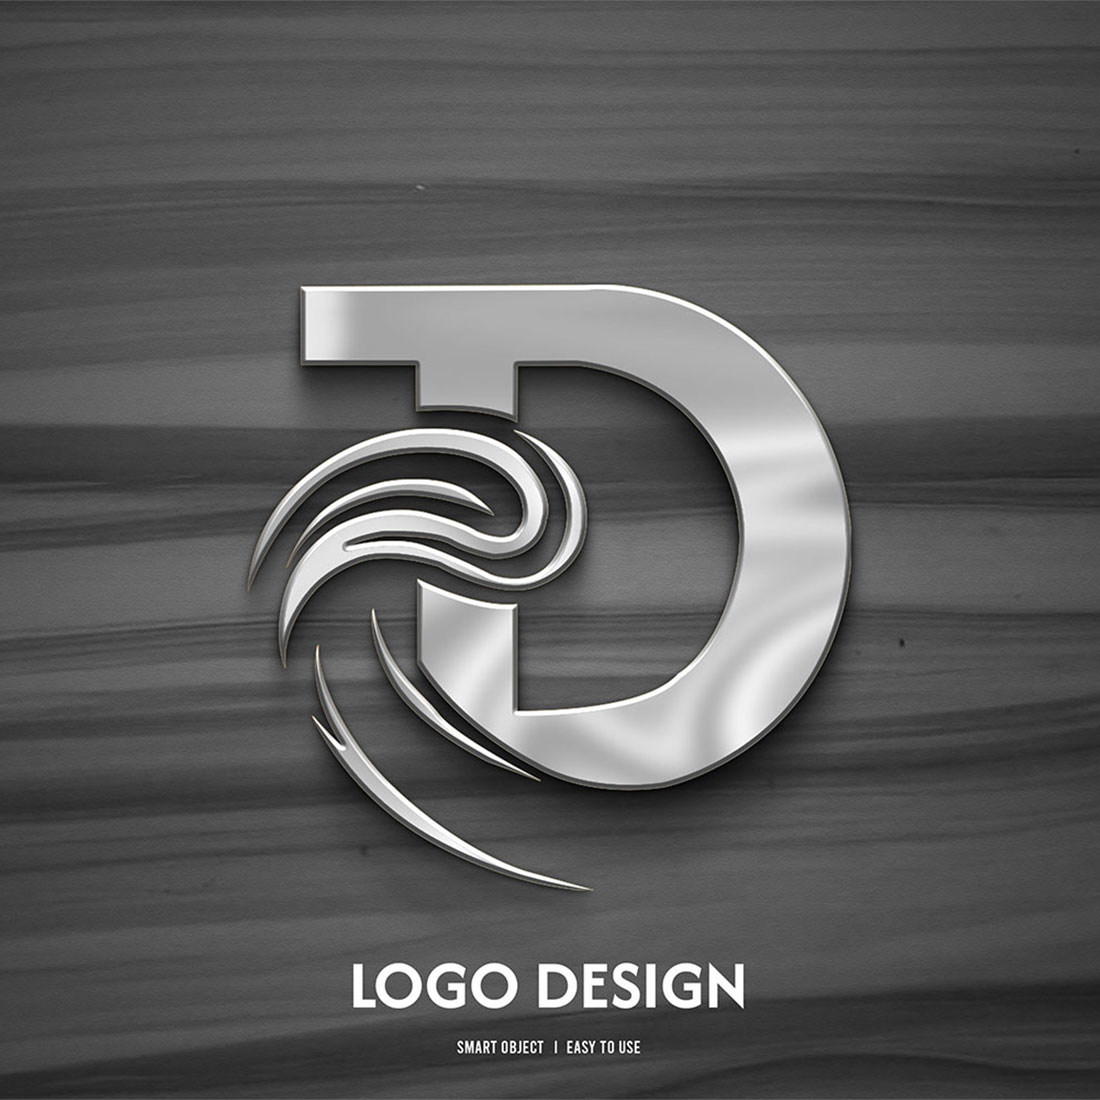 D dynamic Letter Logo preview image.